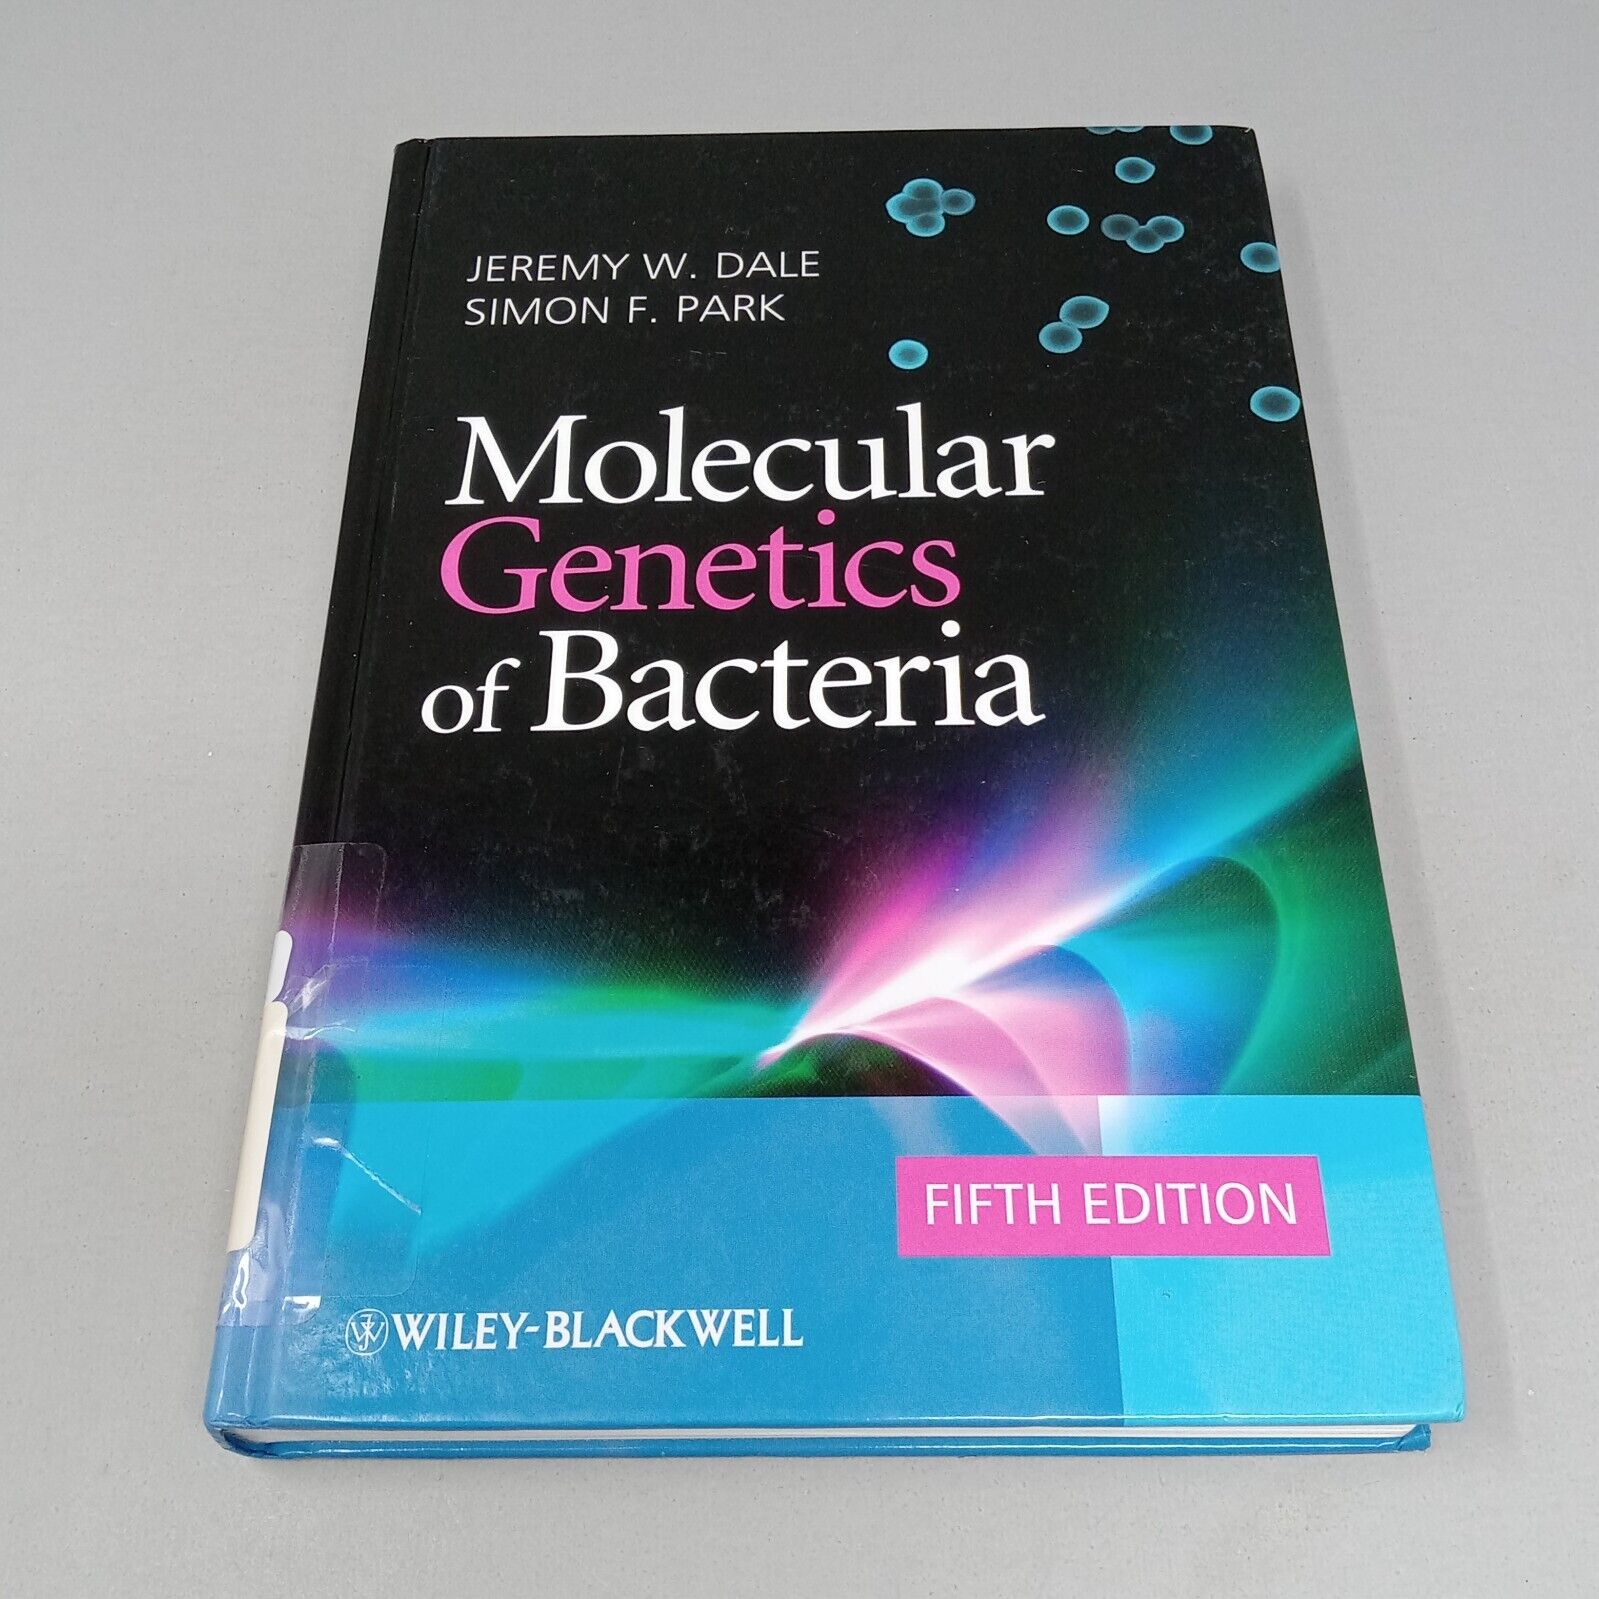 Molecular Genetics Of Bacteria: 2010 Hardcover by Simon F. Park & Jeremy W. Dale